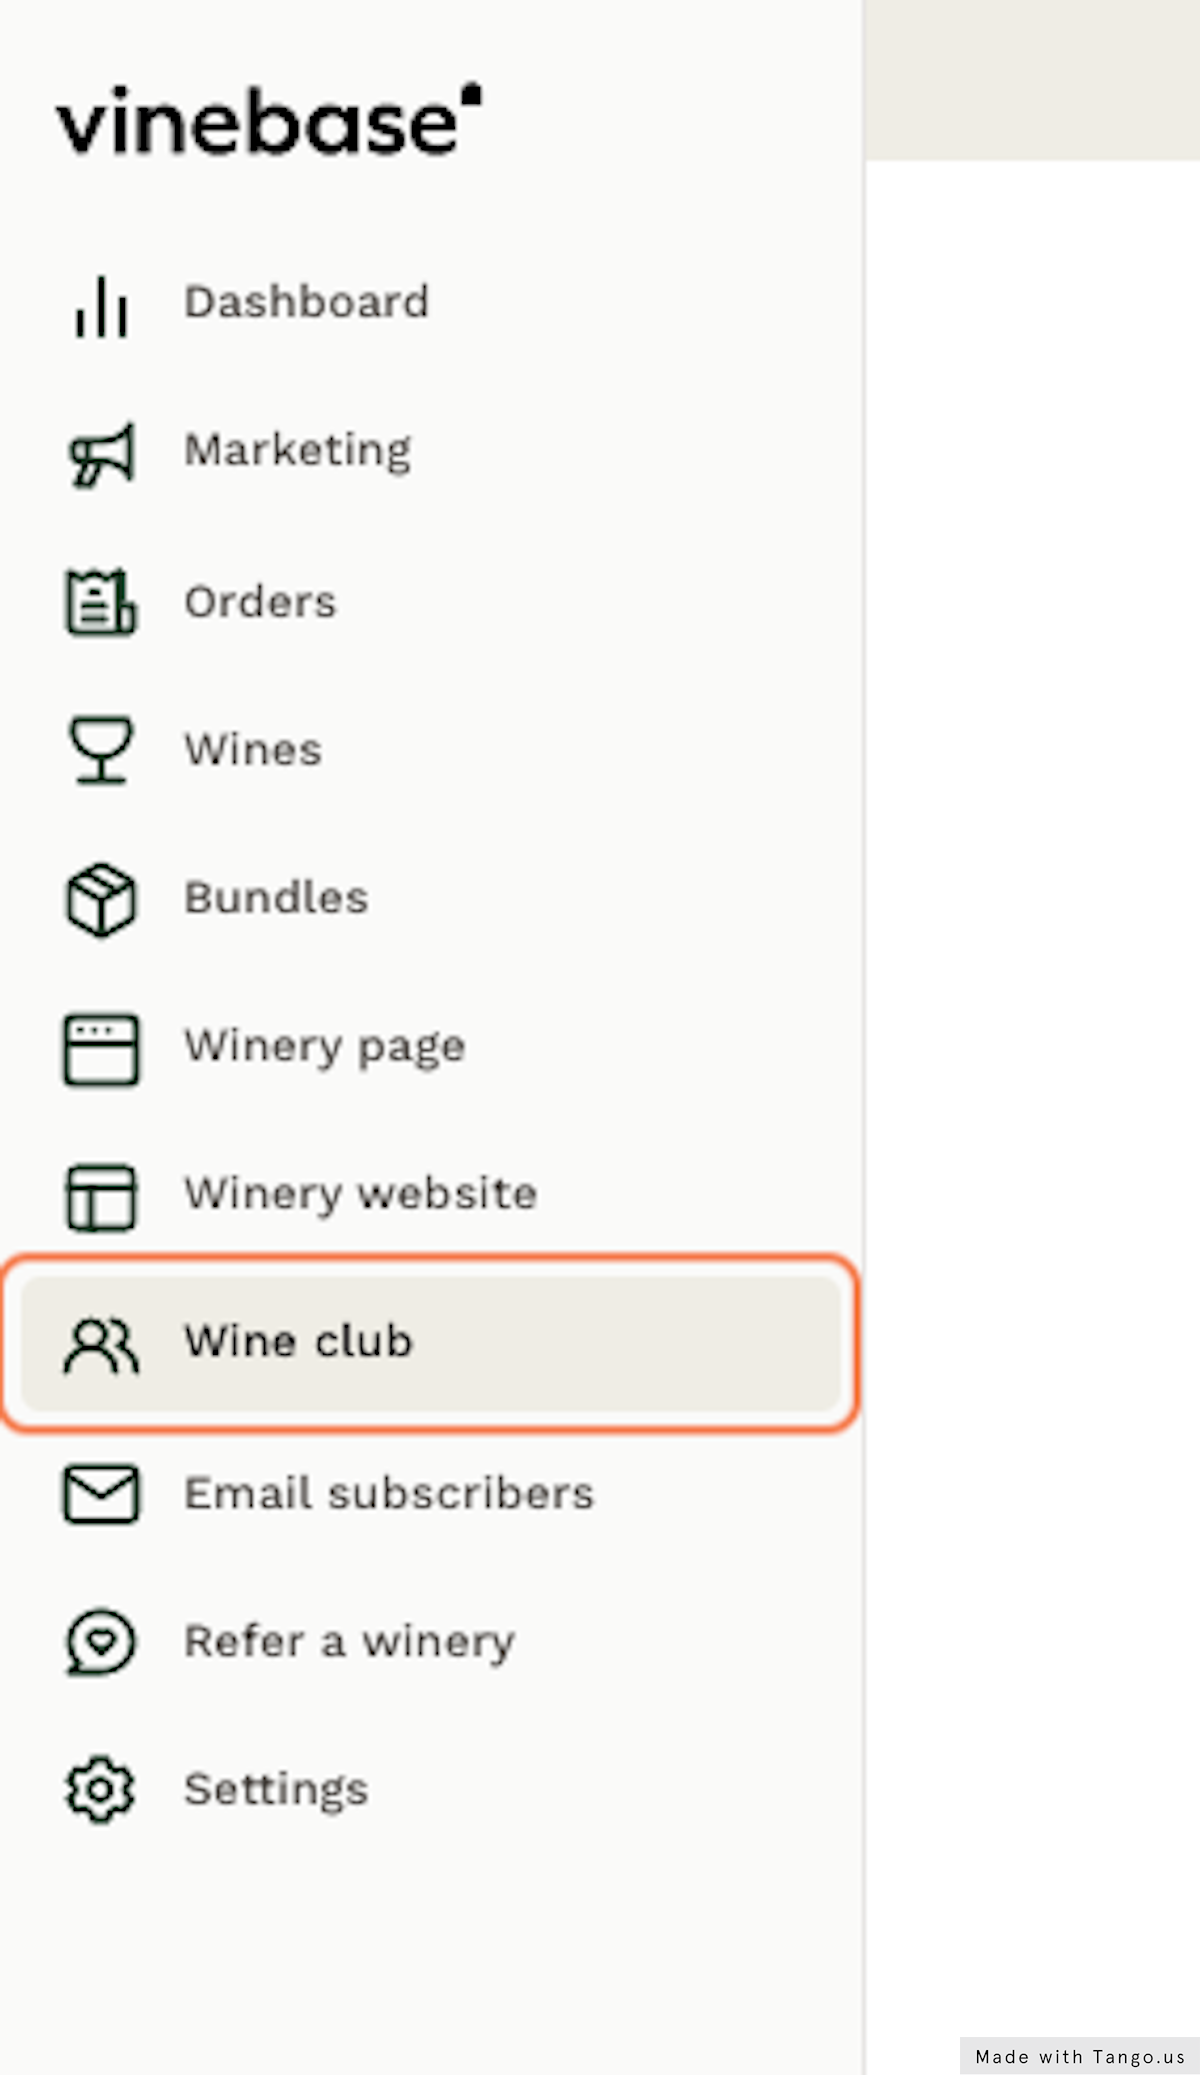 Click on Wine club